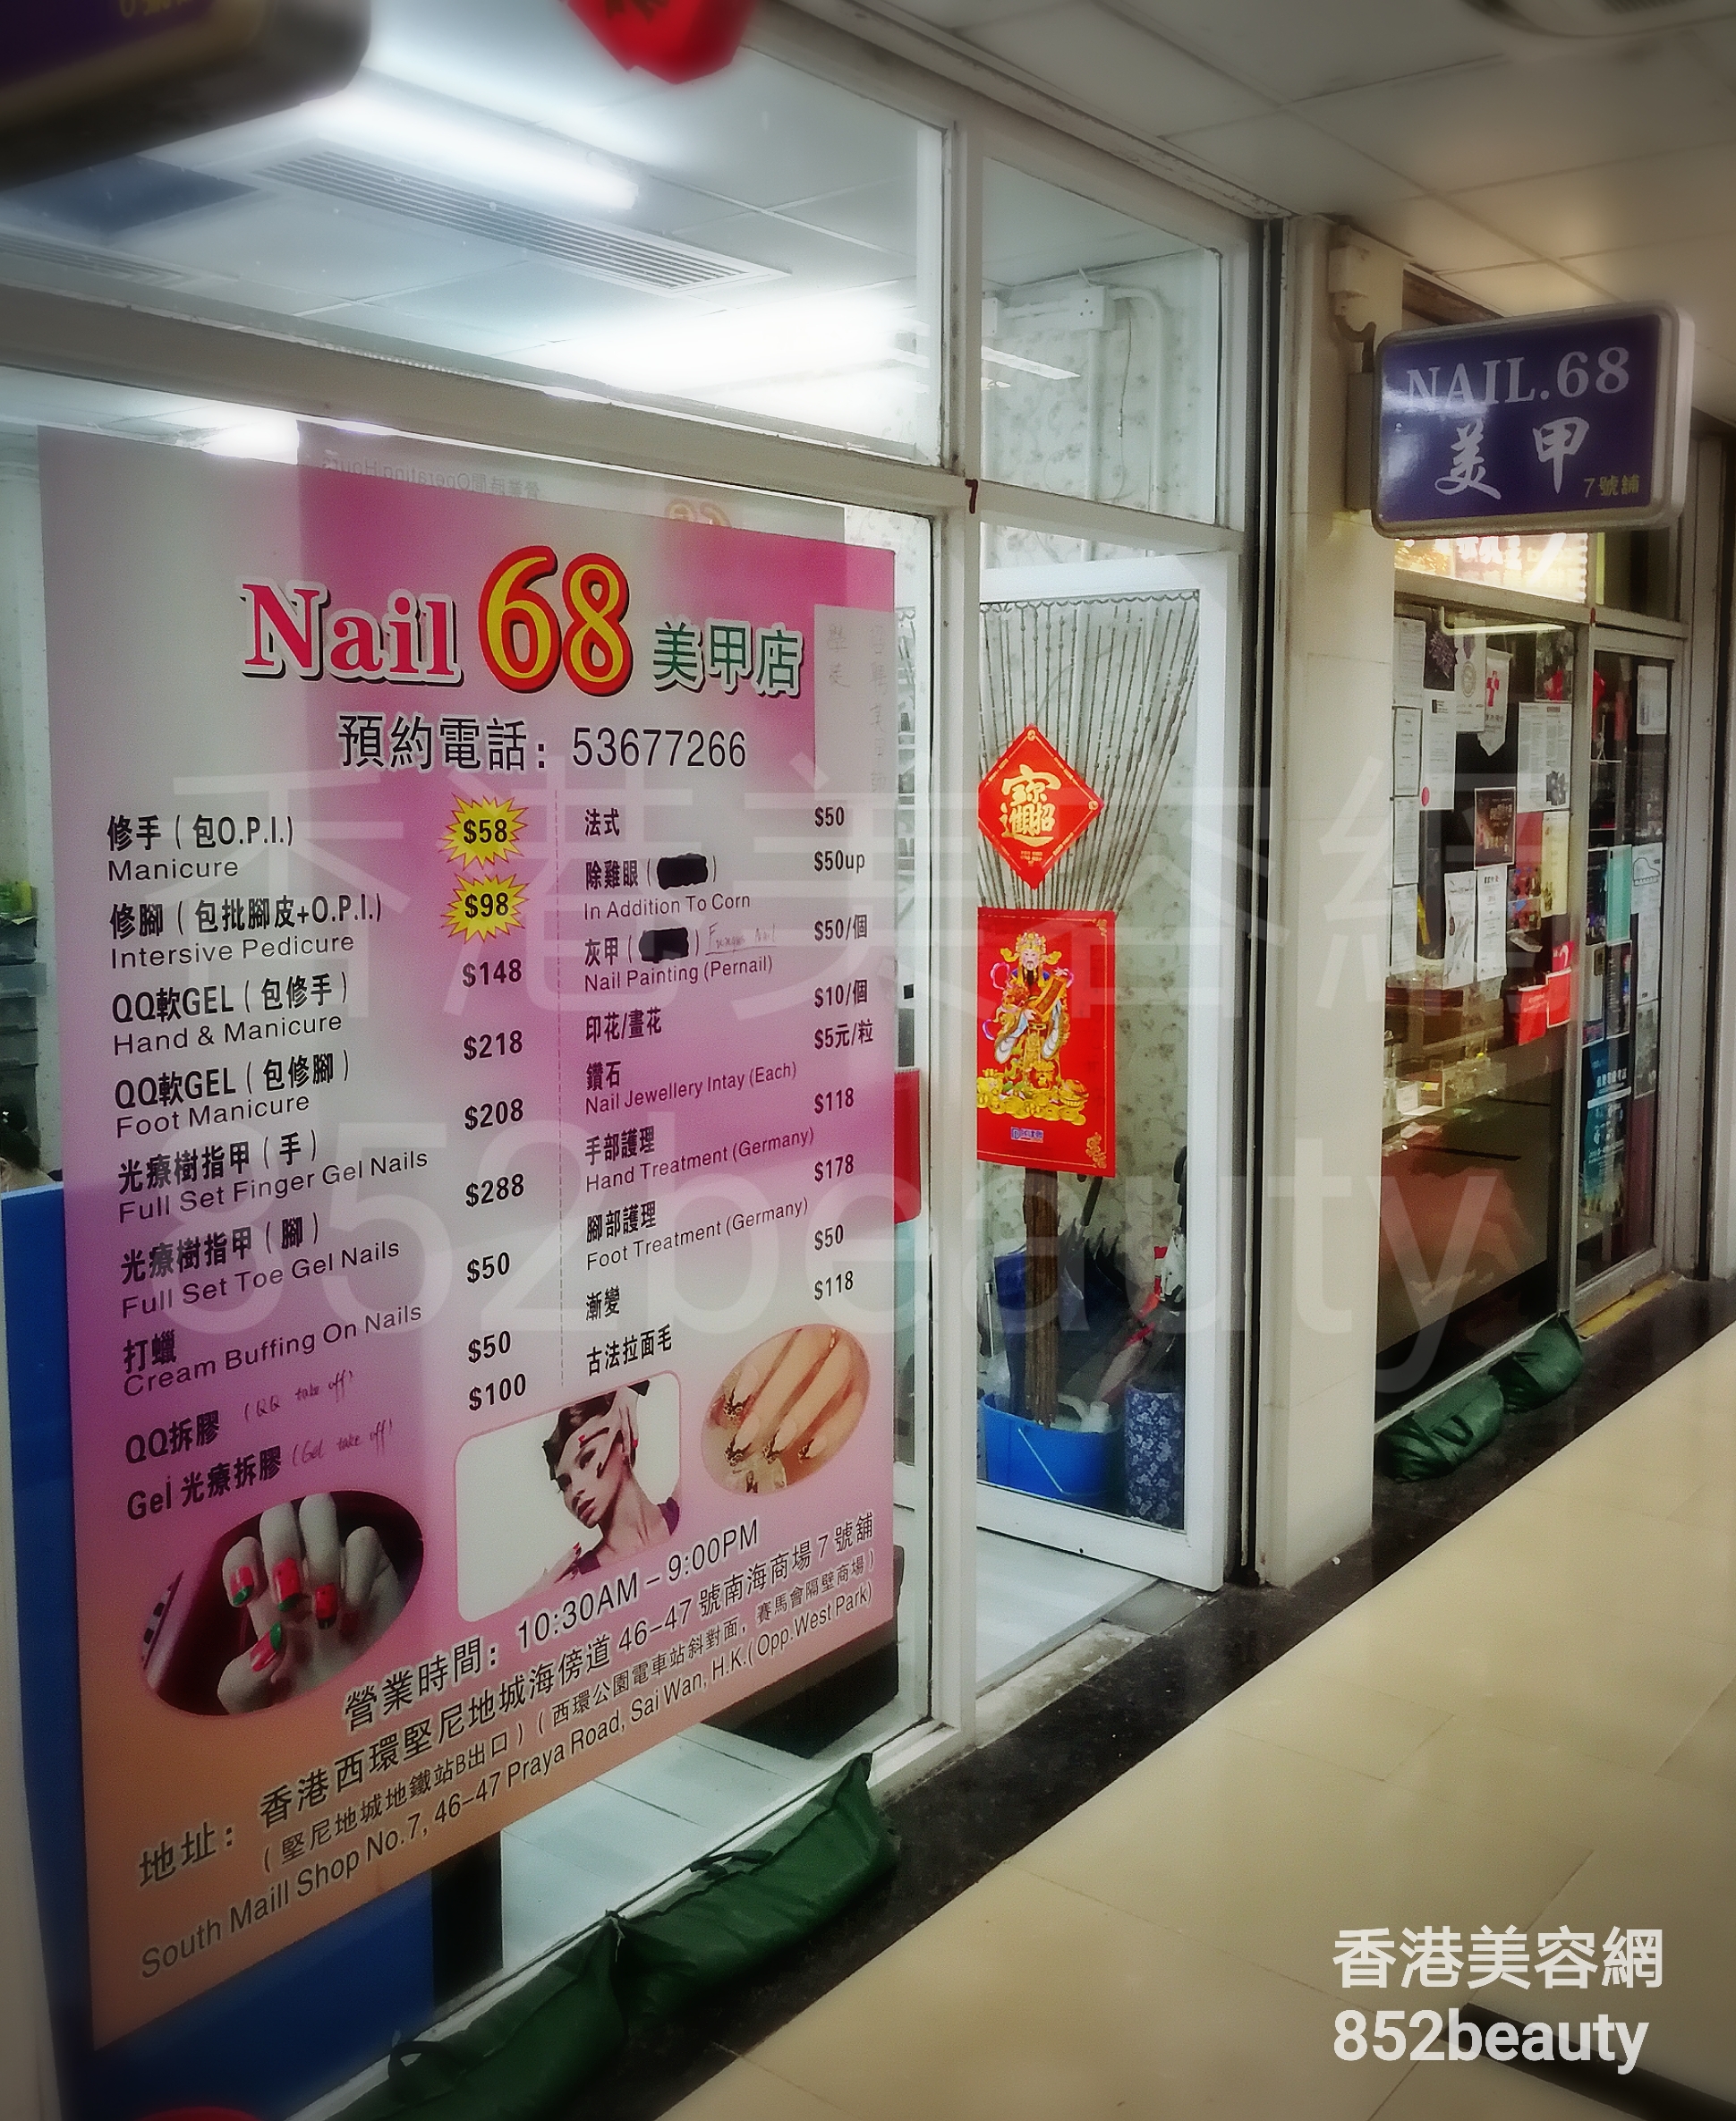 Beauty Salon: Nail 68 美甲店